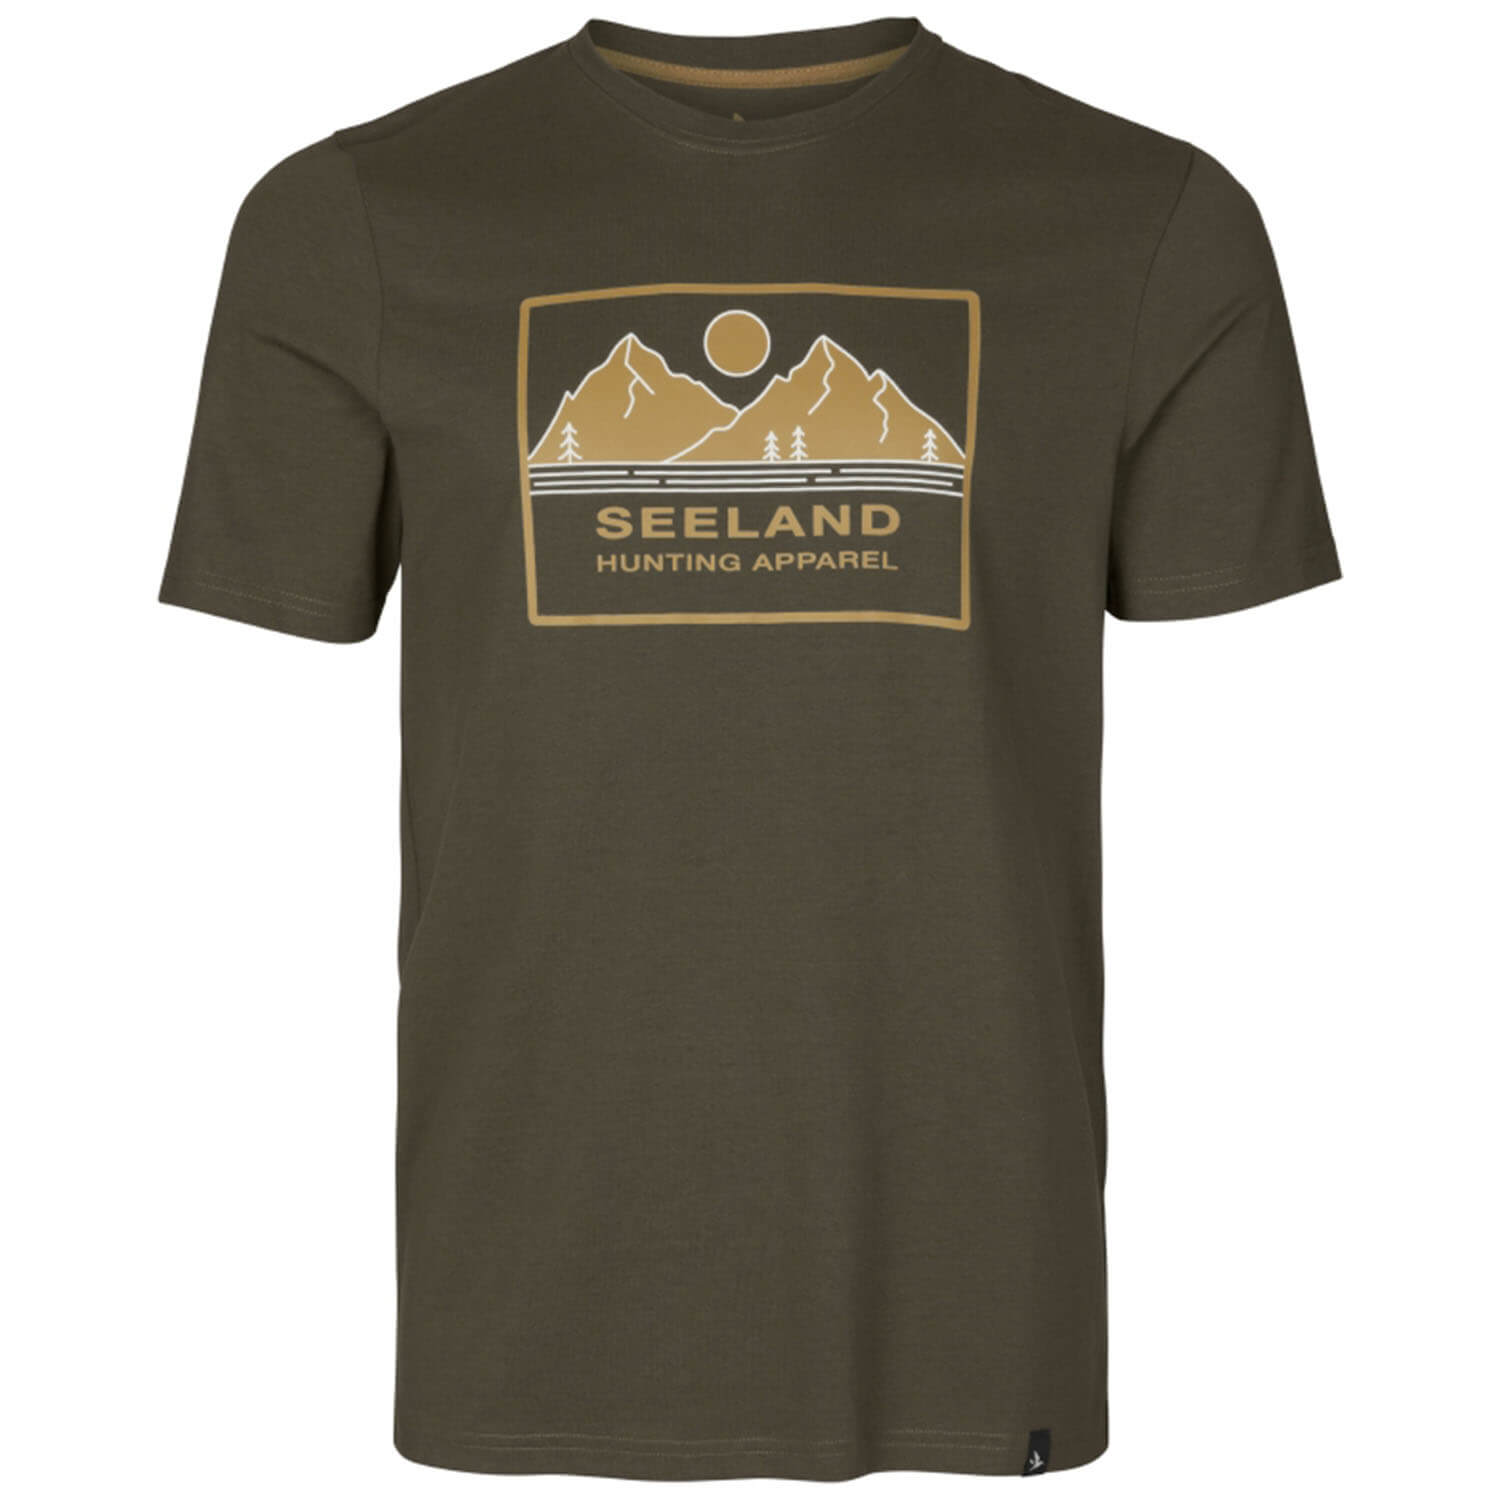  Seeland T-Shirt Torenvalk (Grizzly Bruin)